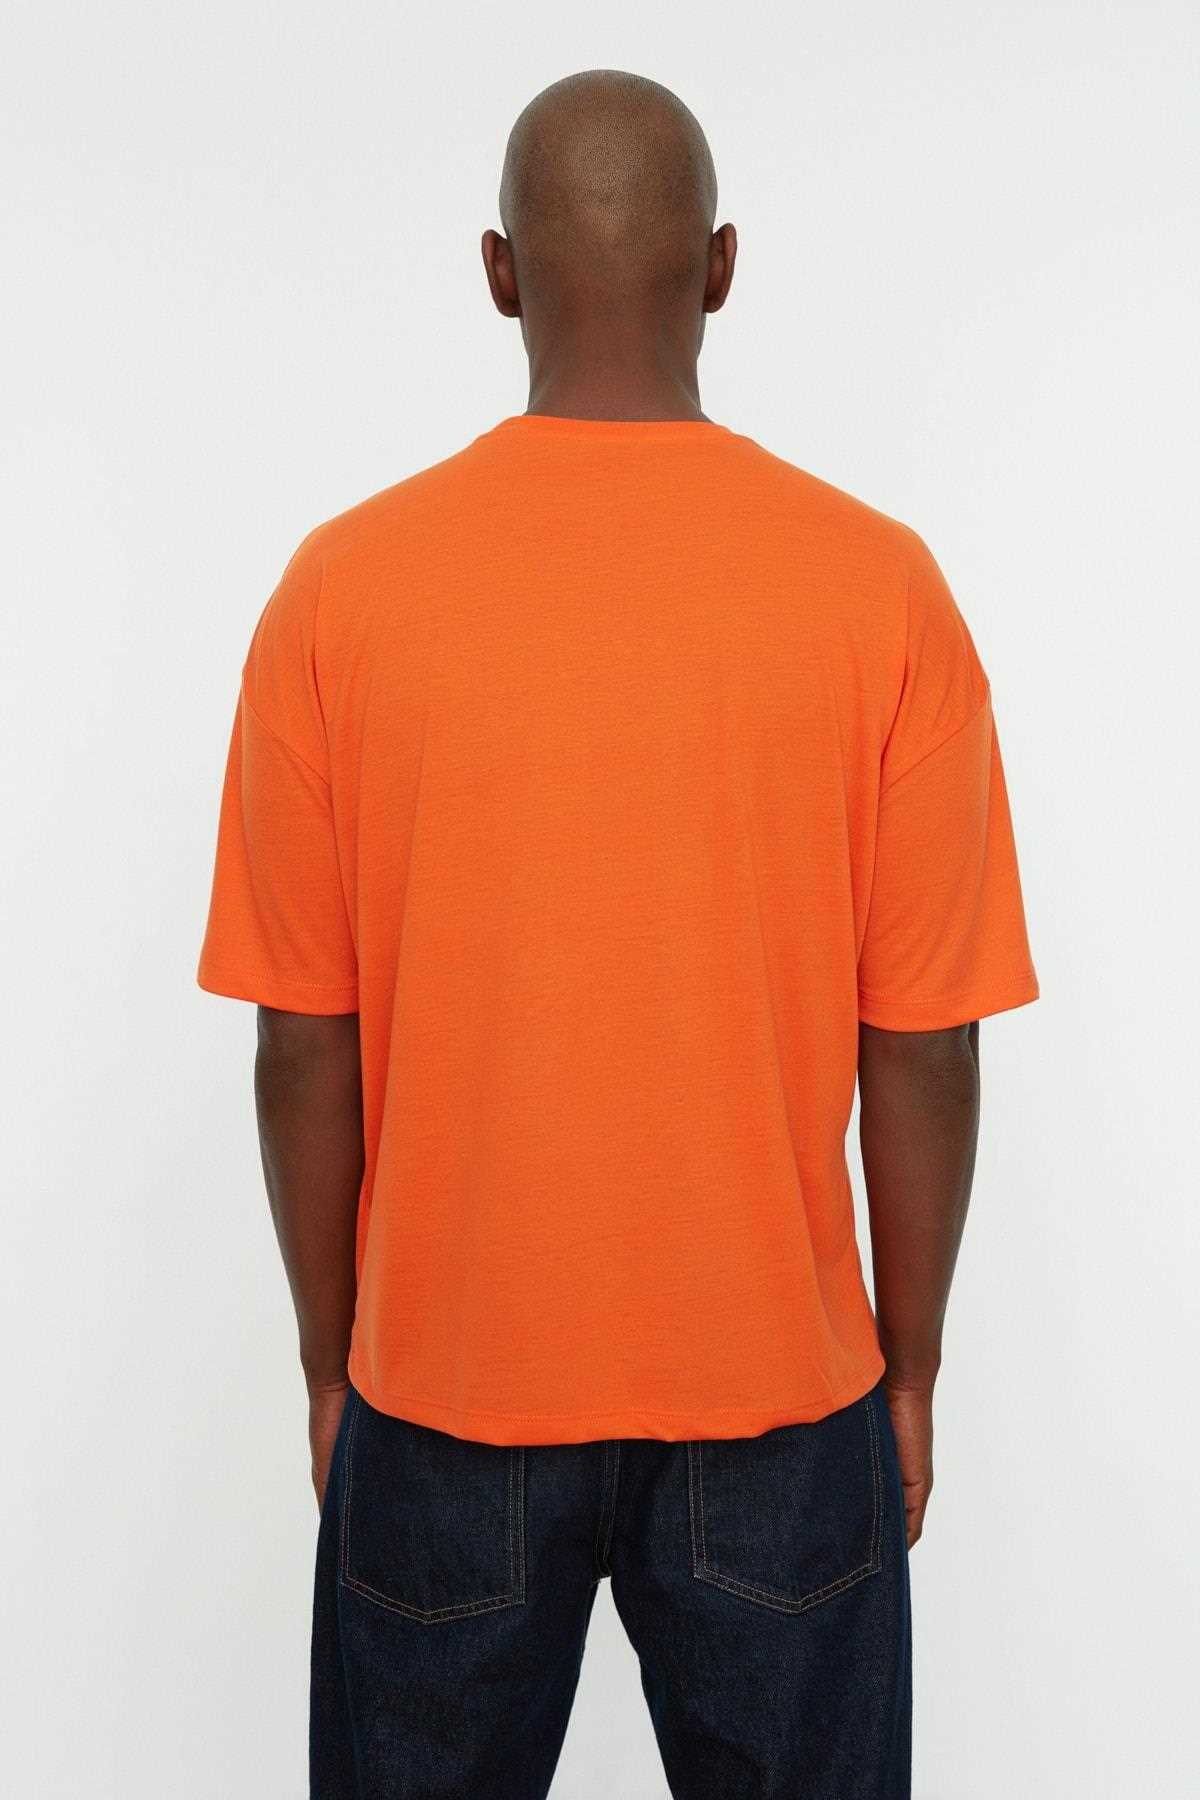 خرید تیشرت مردانه ترک مارک ترندیول مرد رنگ نارنجی ty177013673